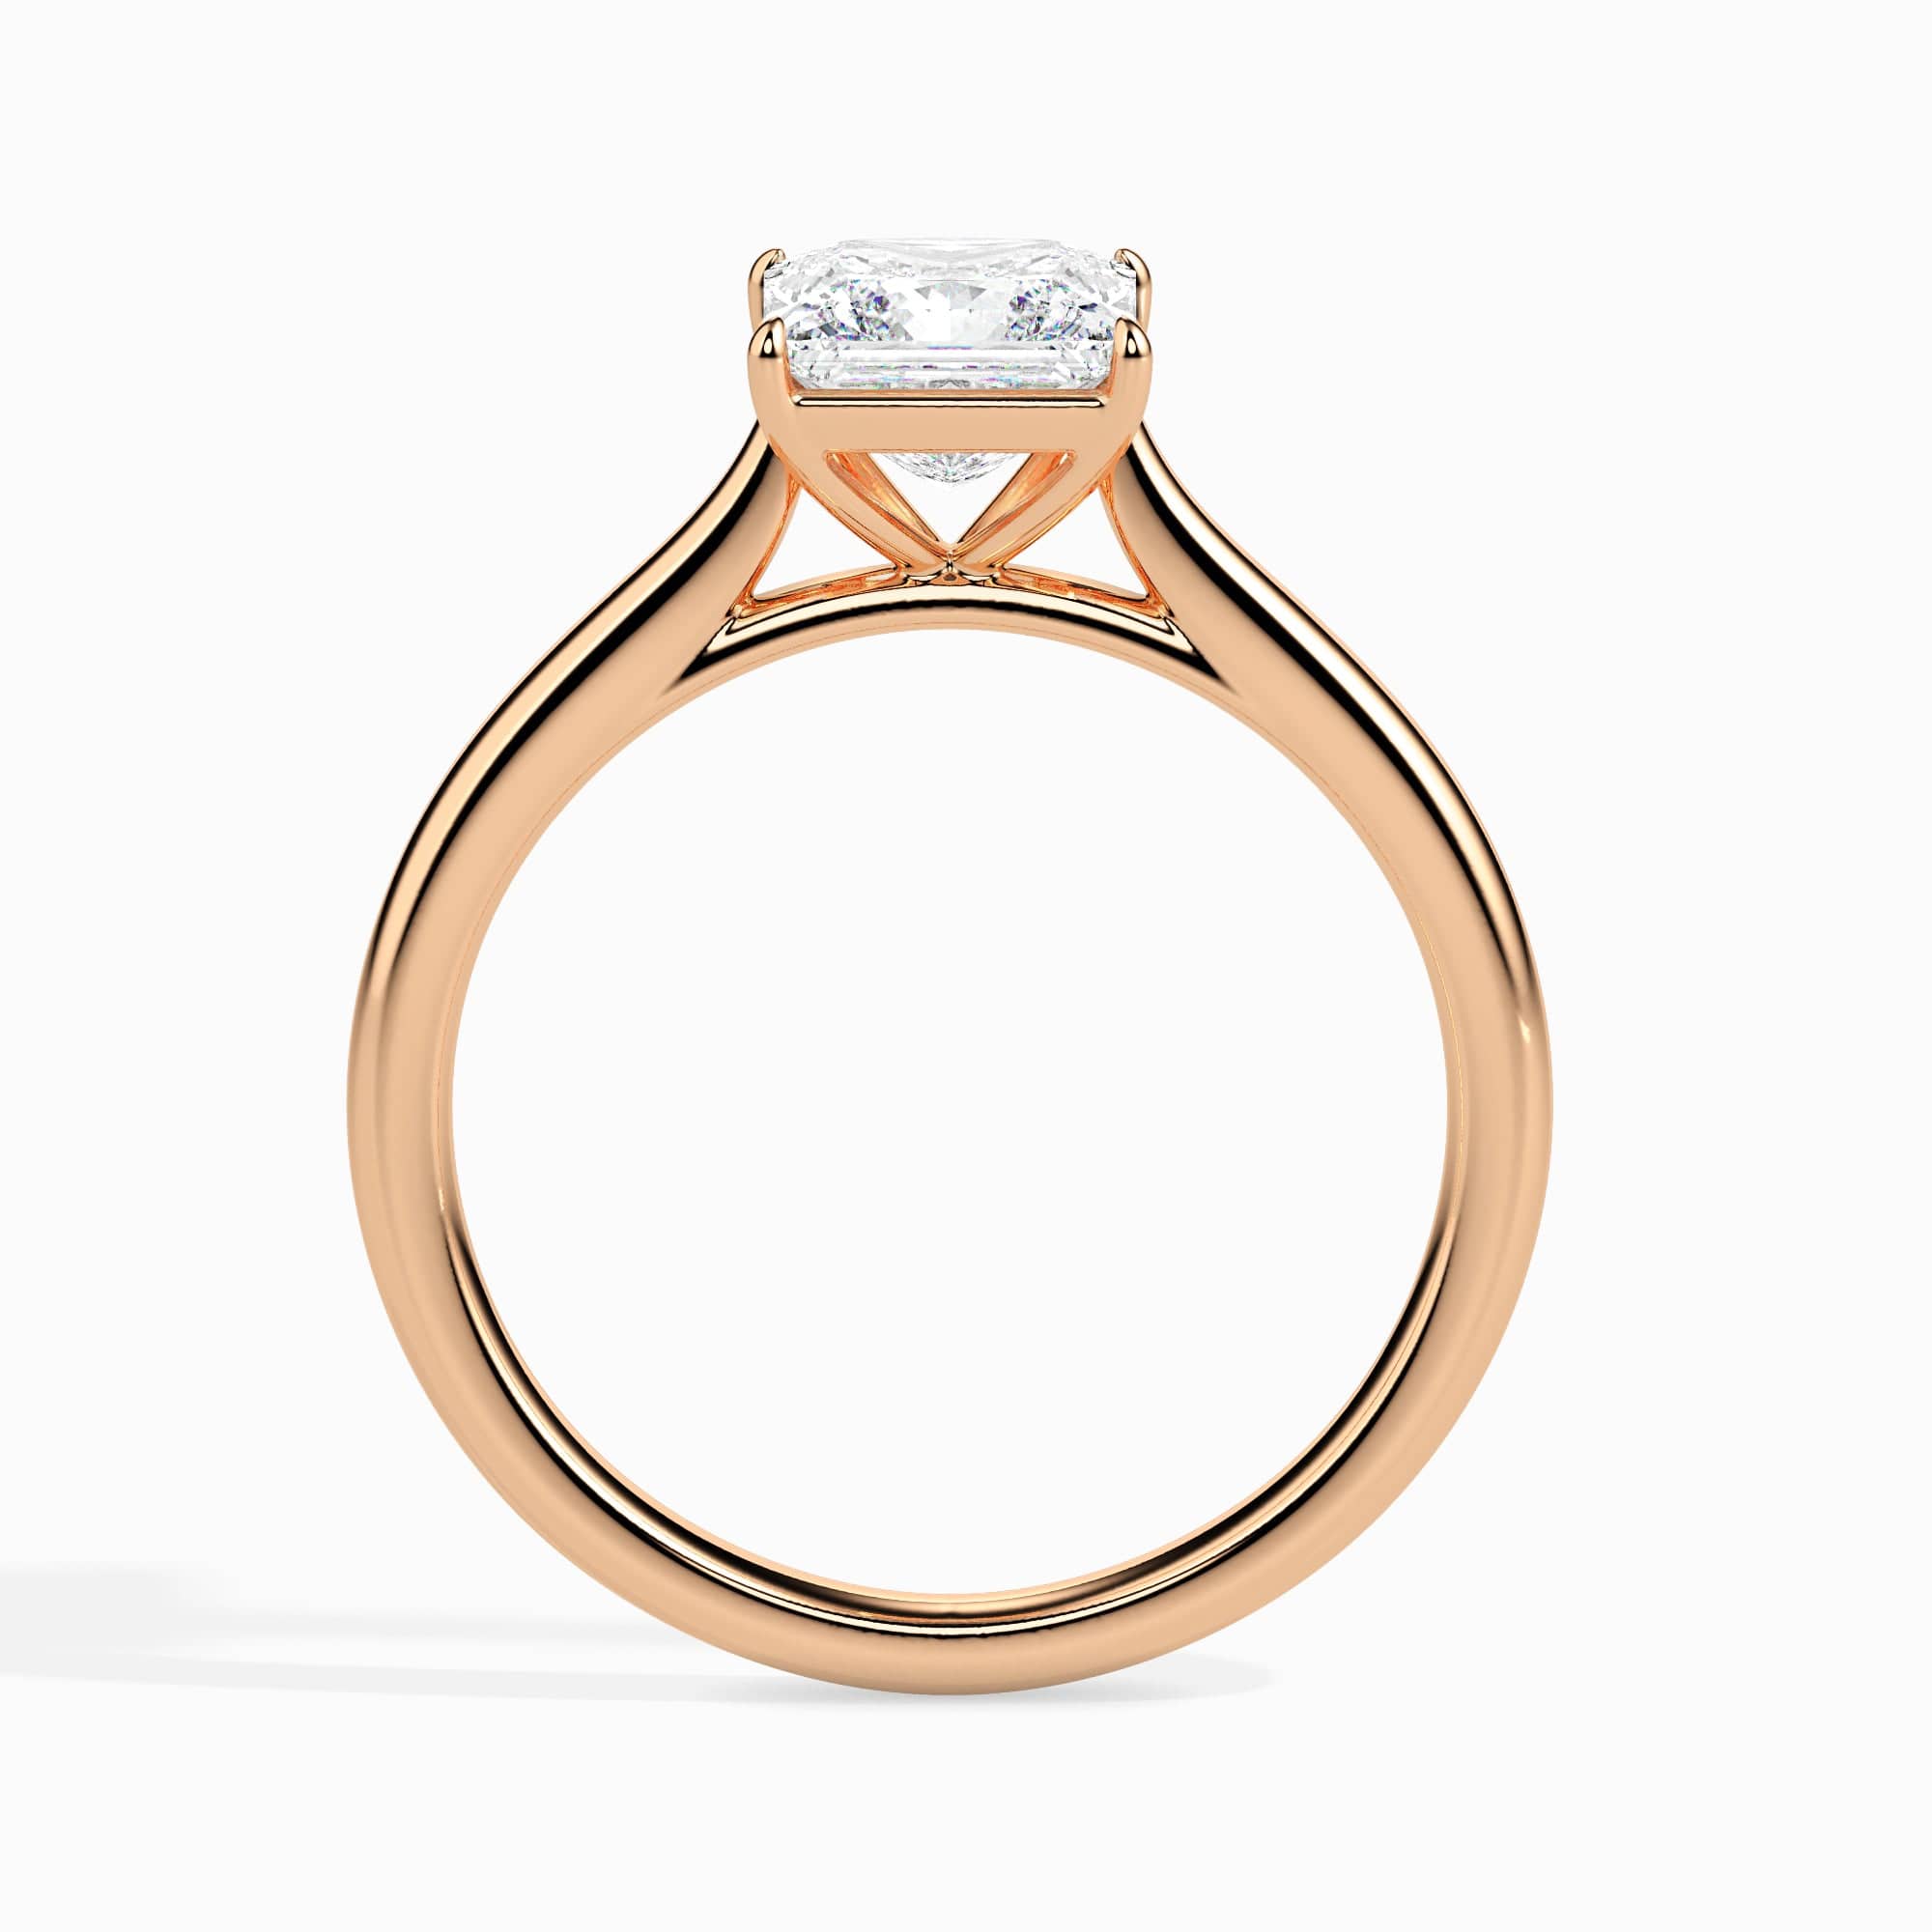 1 Carat Diamond Ring | Barkev's